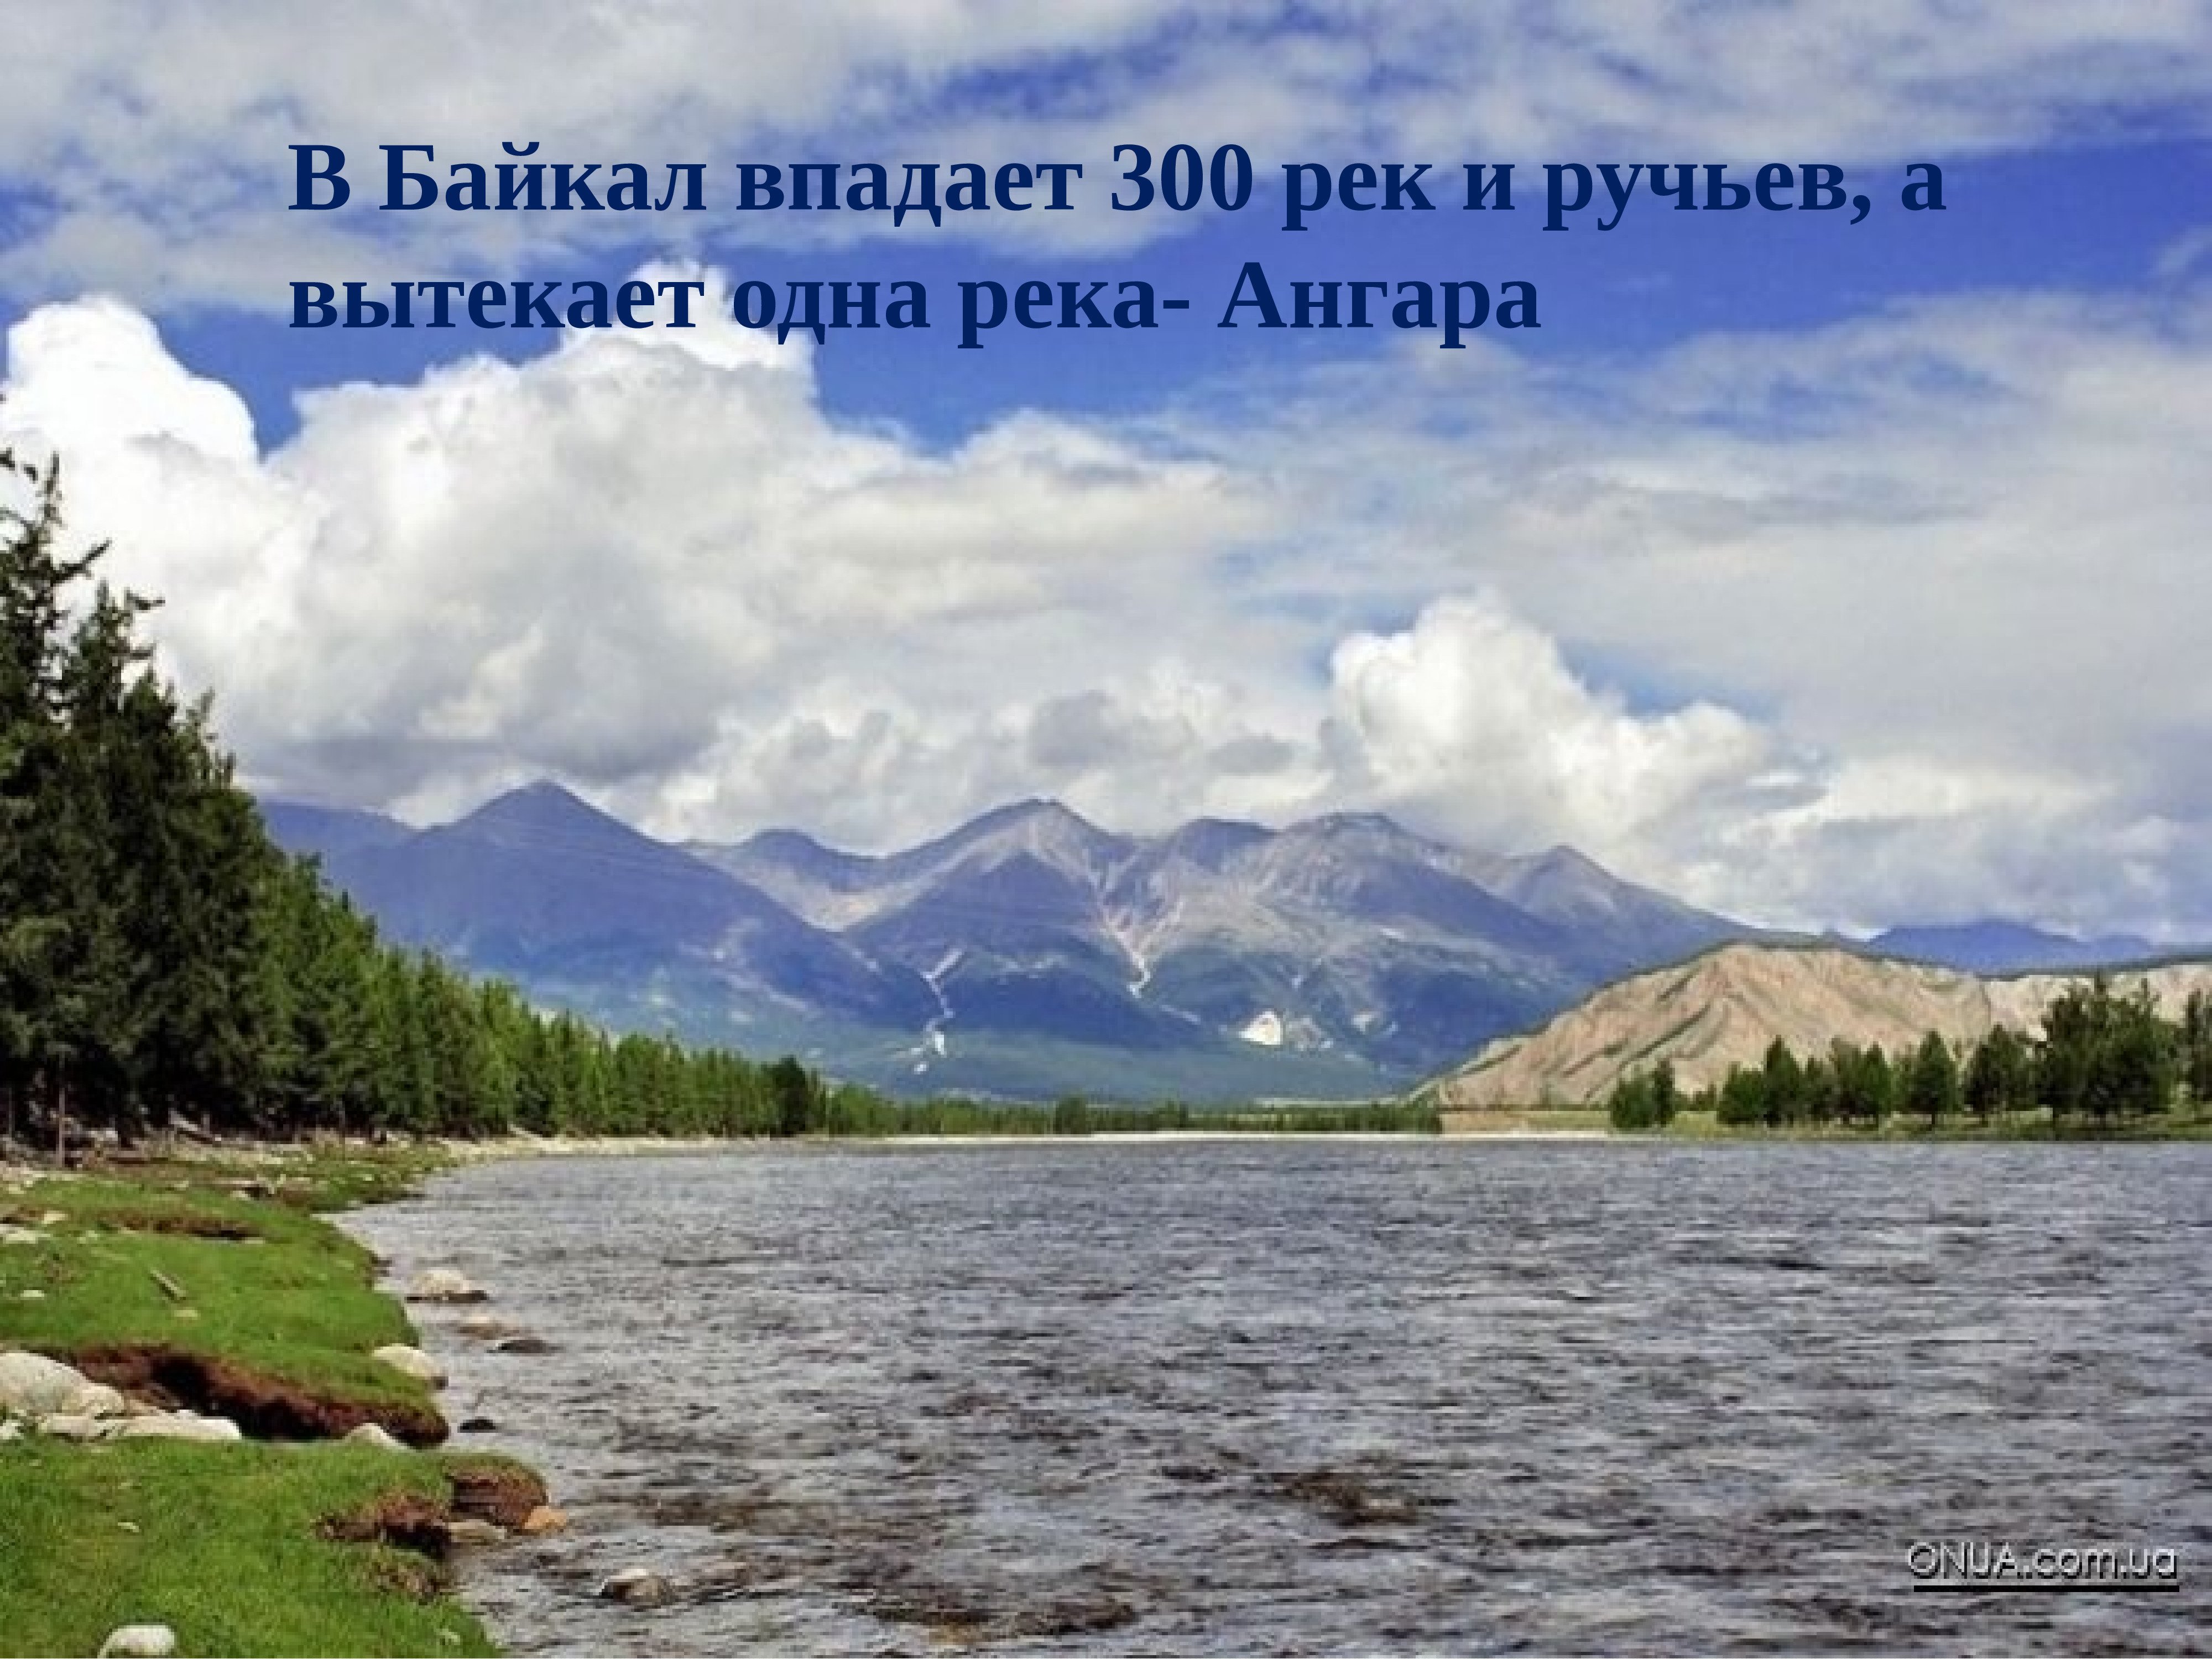 Озера на территории евразии. Красота озера Байкал. Республика Алтай озеро Байкал. Байкал озеро Евразии. Озеро Байкал фото.